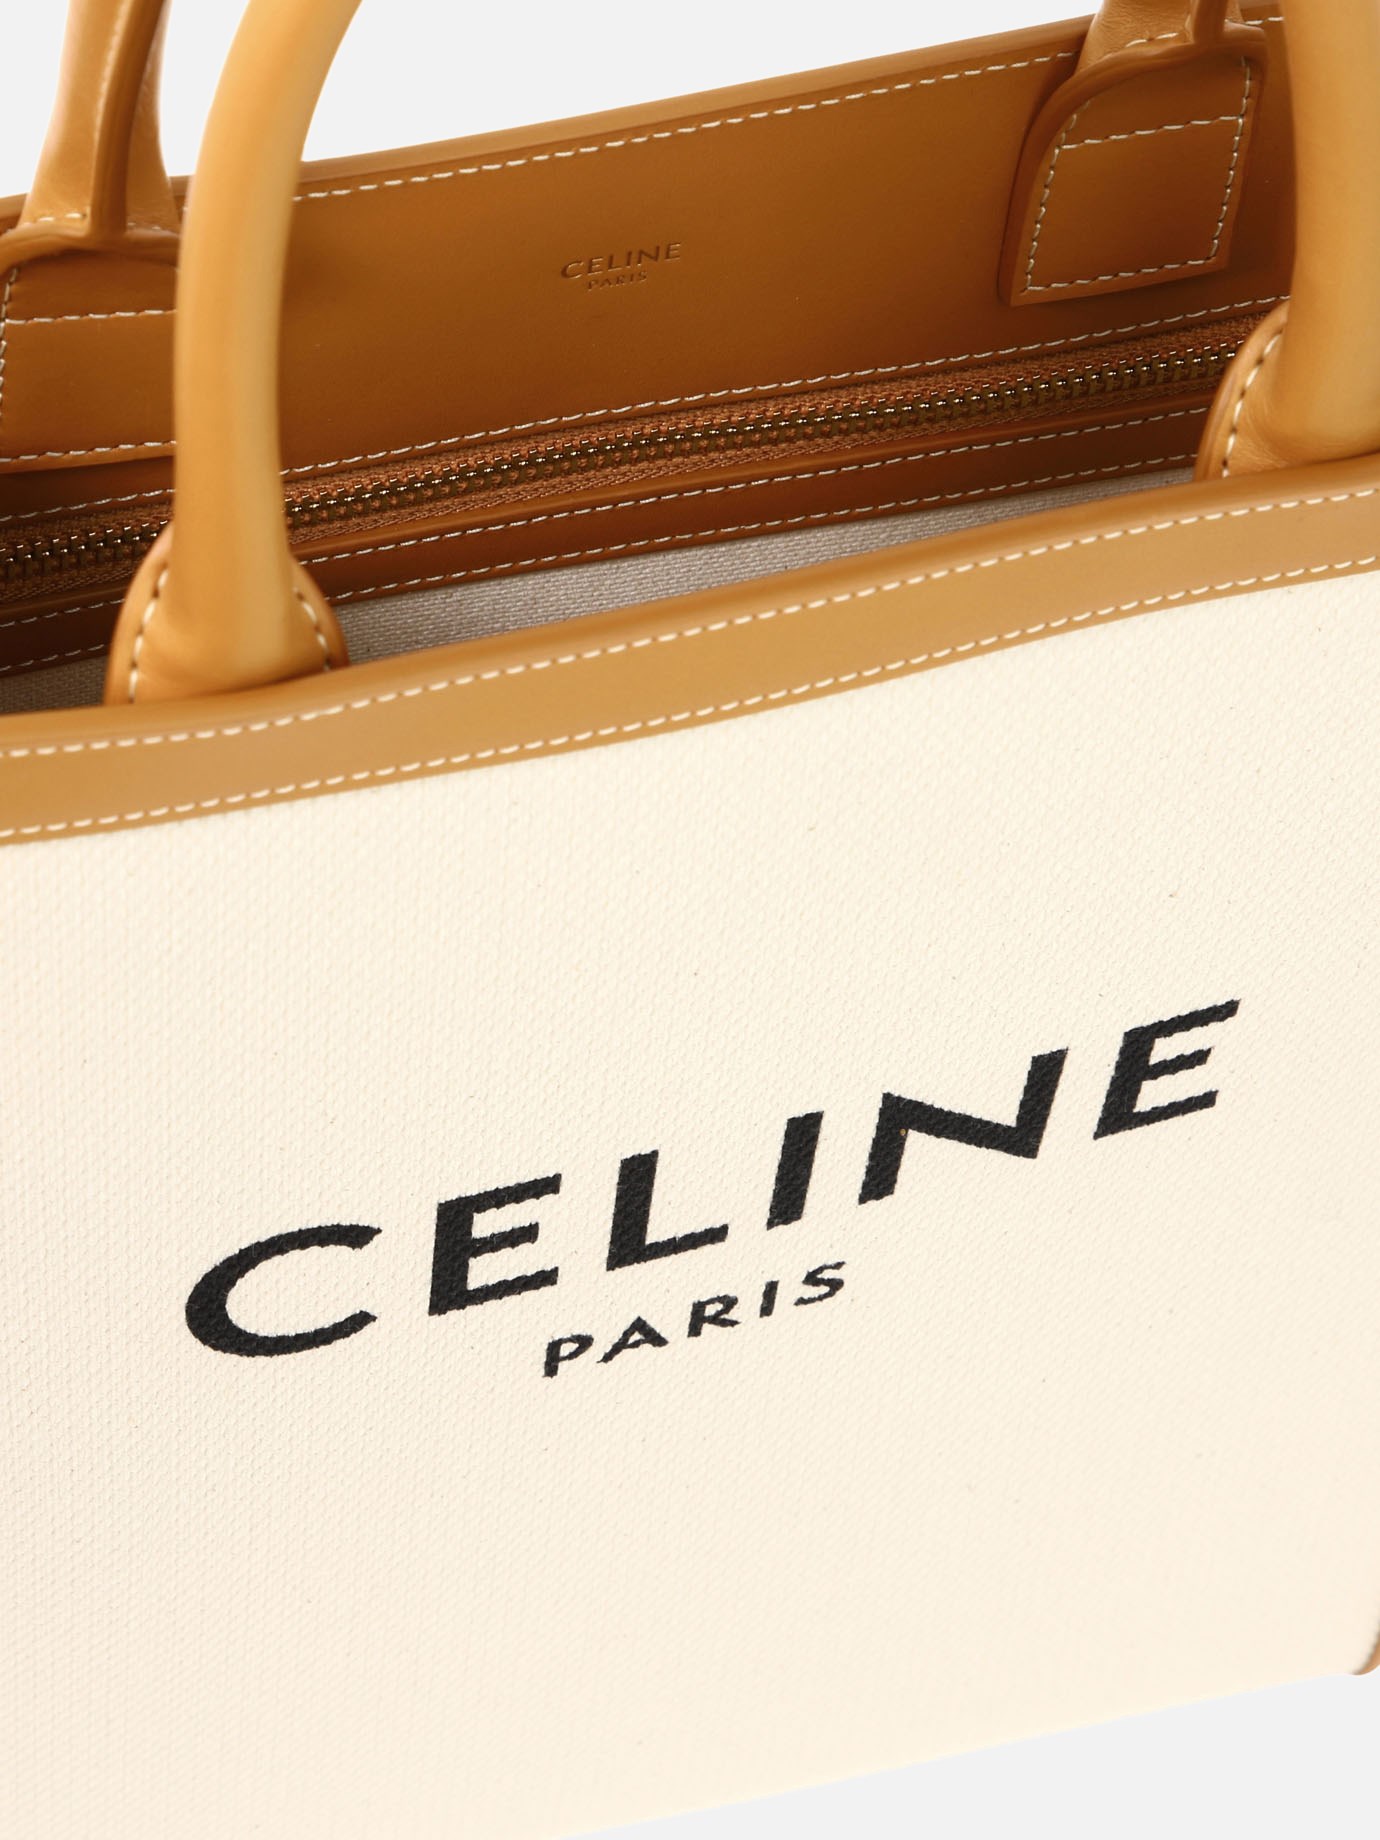  Cabas Vertical  handbag by Celine